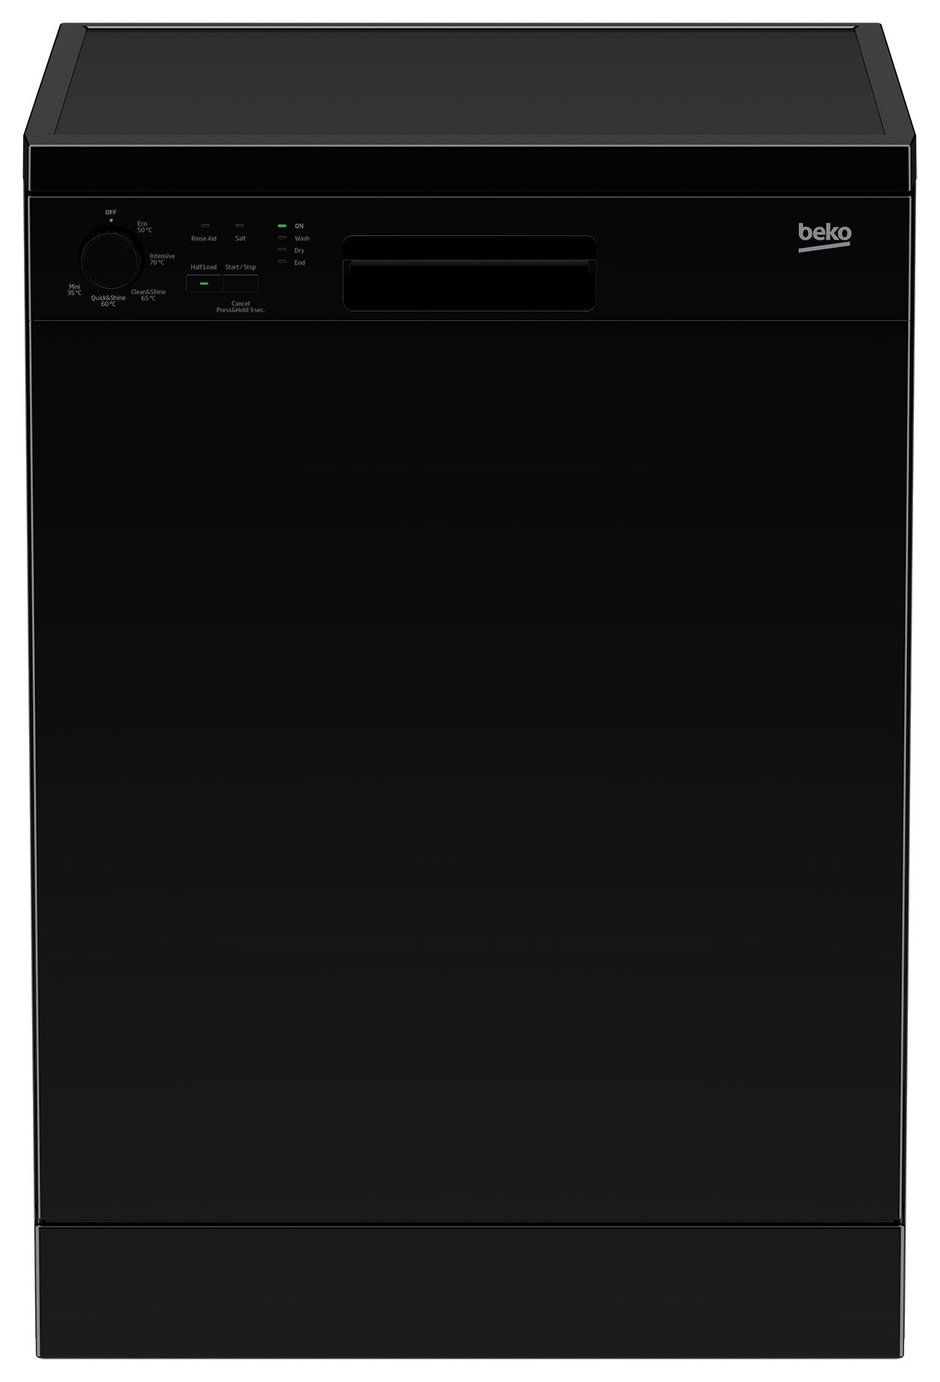 Beko DFN05310B Full Size Dishwasher - Black